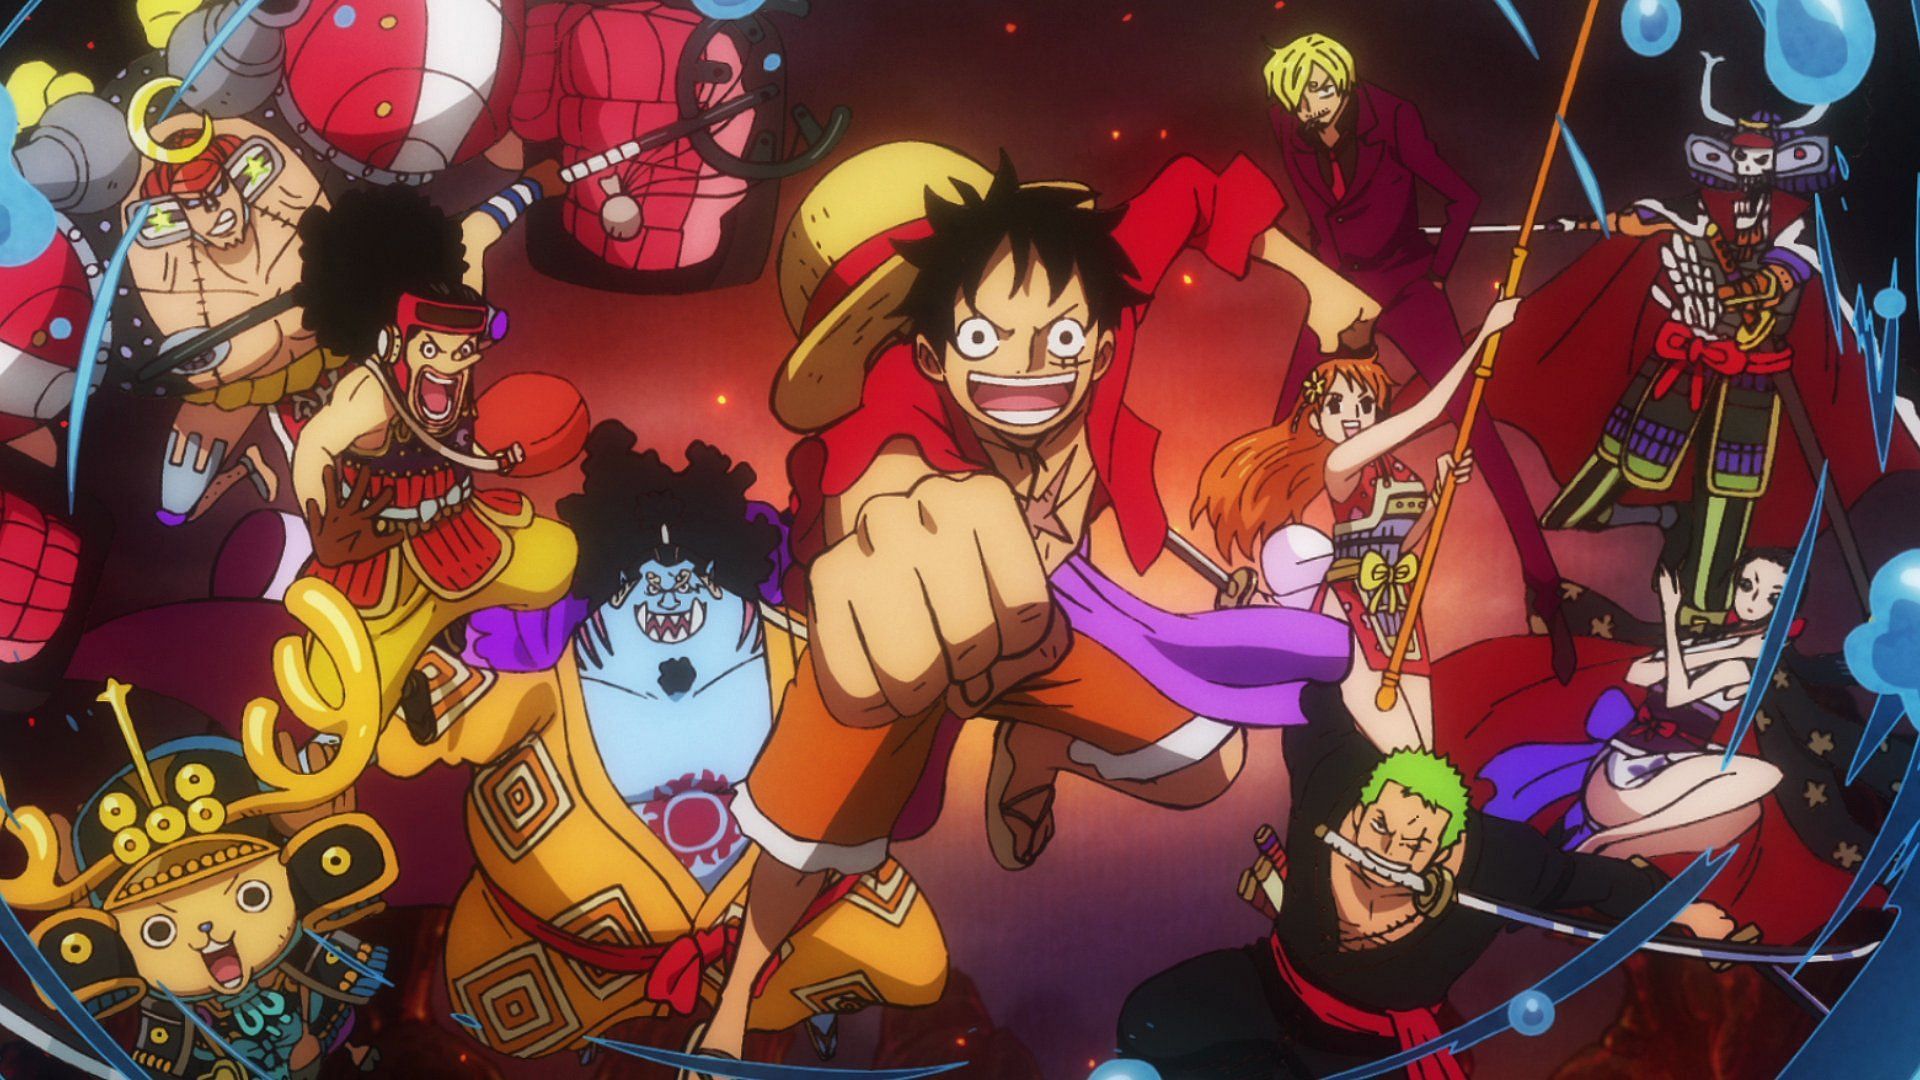 The Straw Hat crew as seen in the One Piece anime (Image Credits: Eiichiro Oda/Shueisha, Viz Media, One Piece)